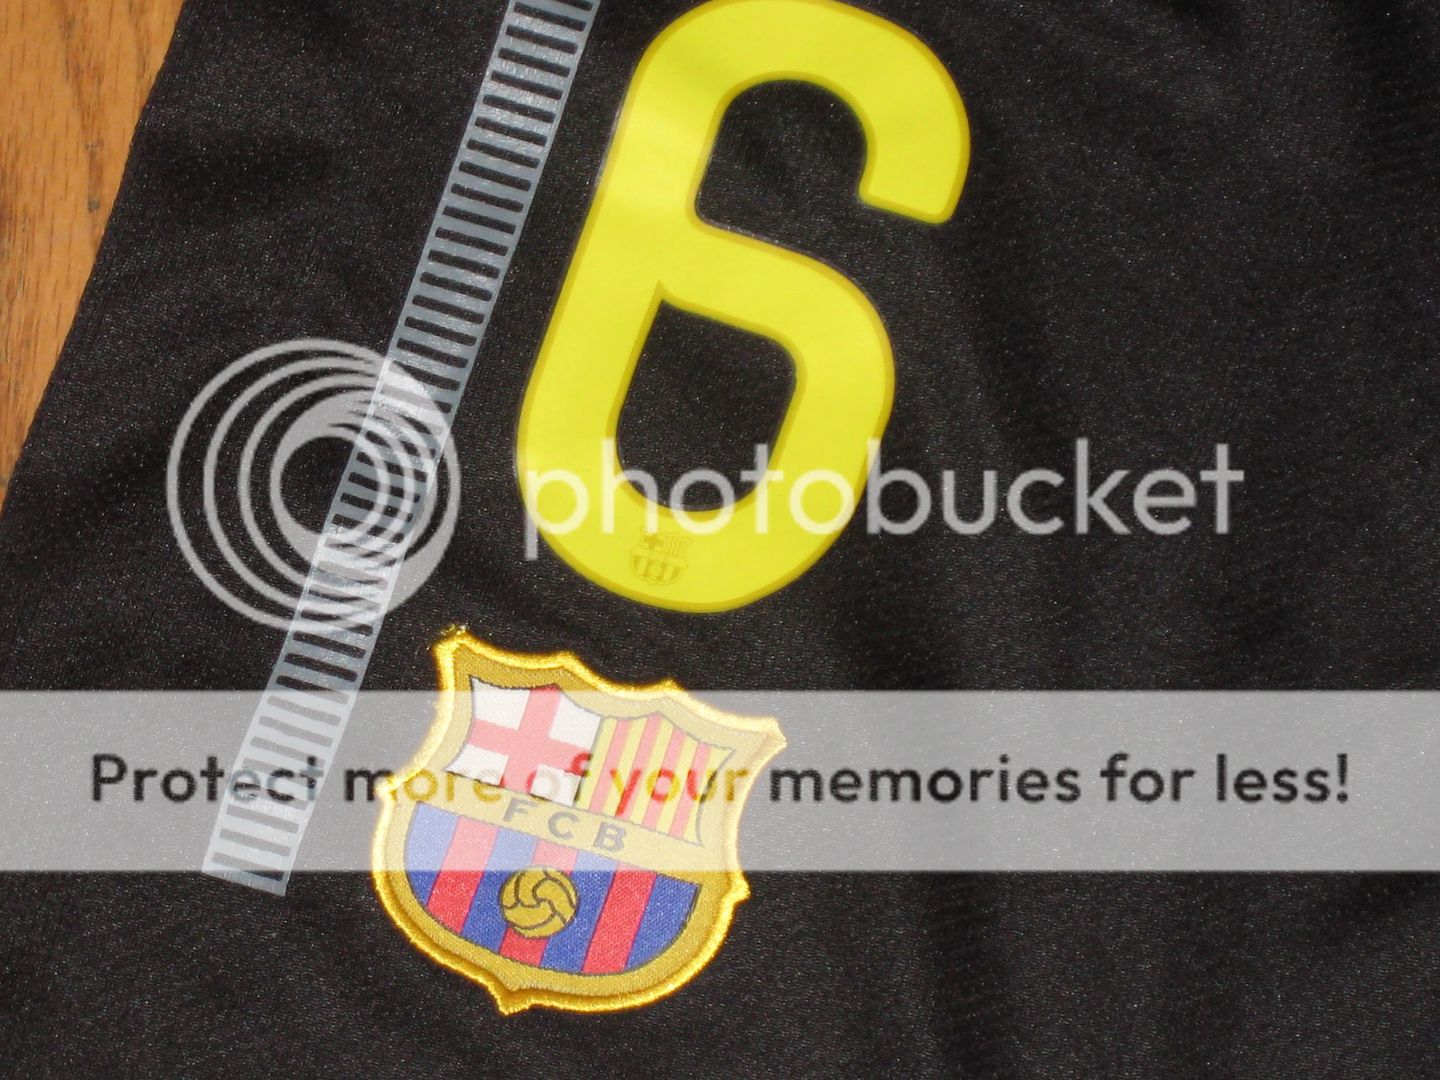 BNWT #6 Xavi Barcelona Black Jersey + Shorts Longsleeve W/LFP patch 